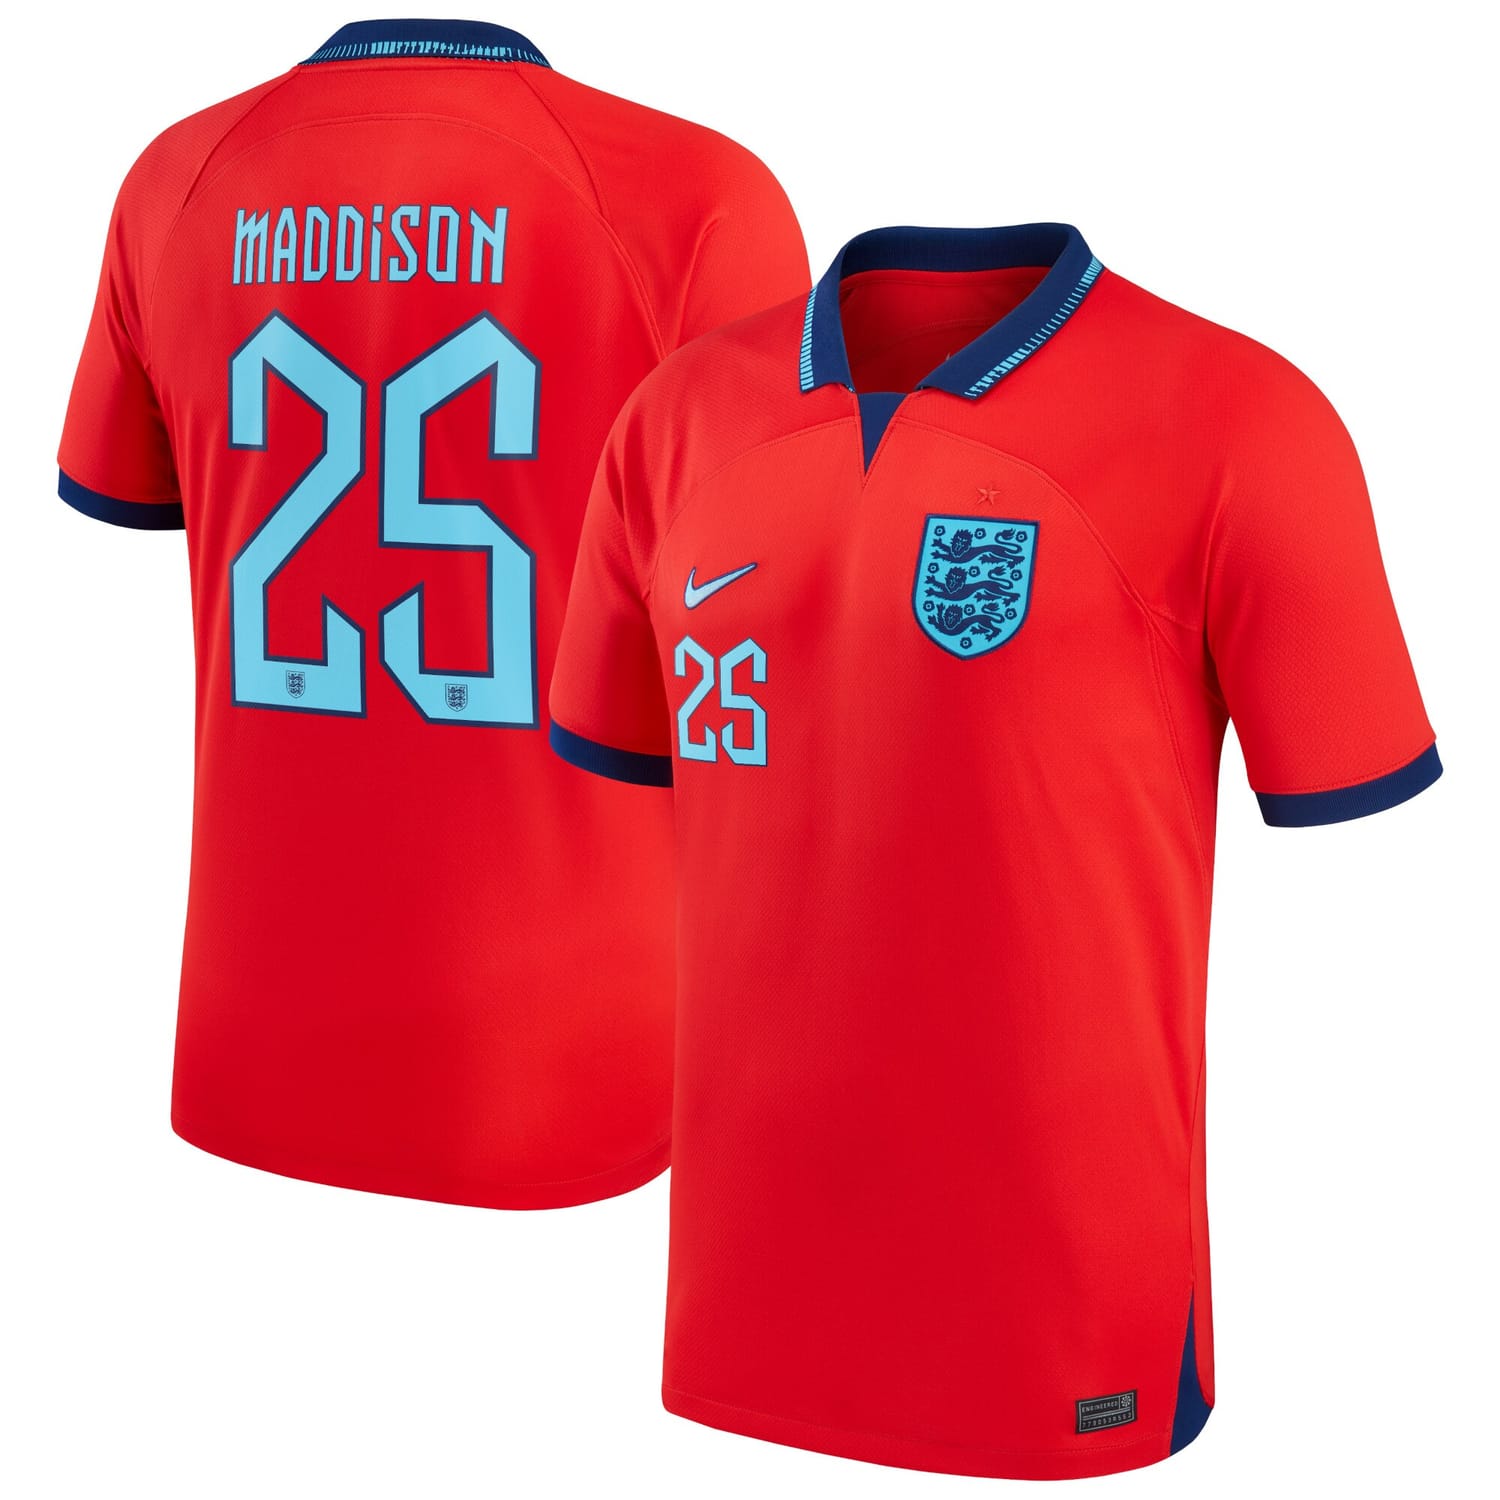 England National Team Away Jersey Shirt 2022 player James Maddison 25 printing for Men